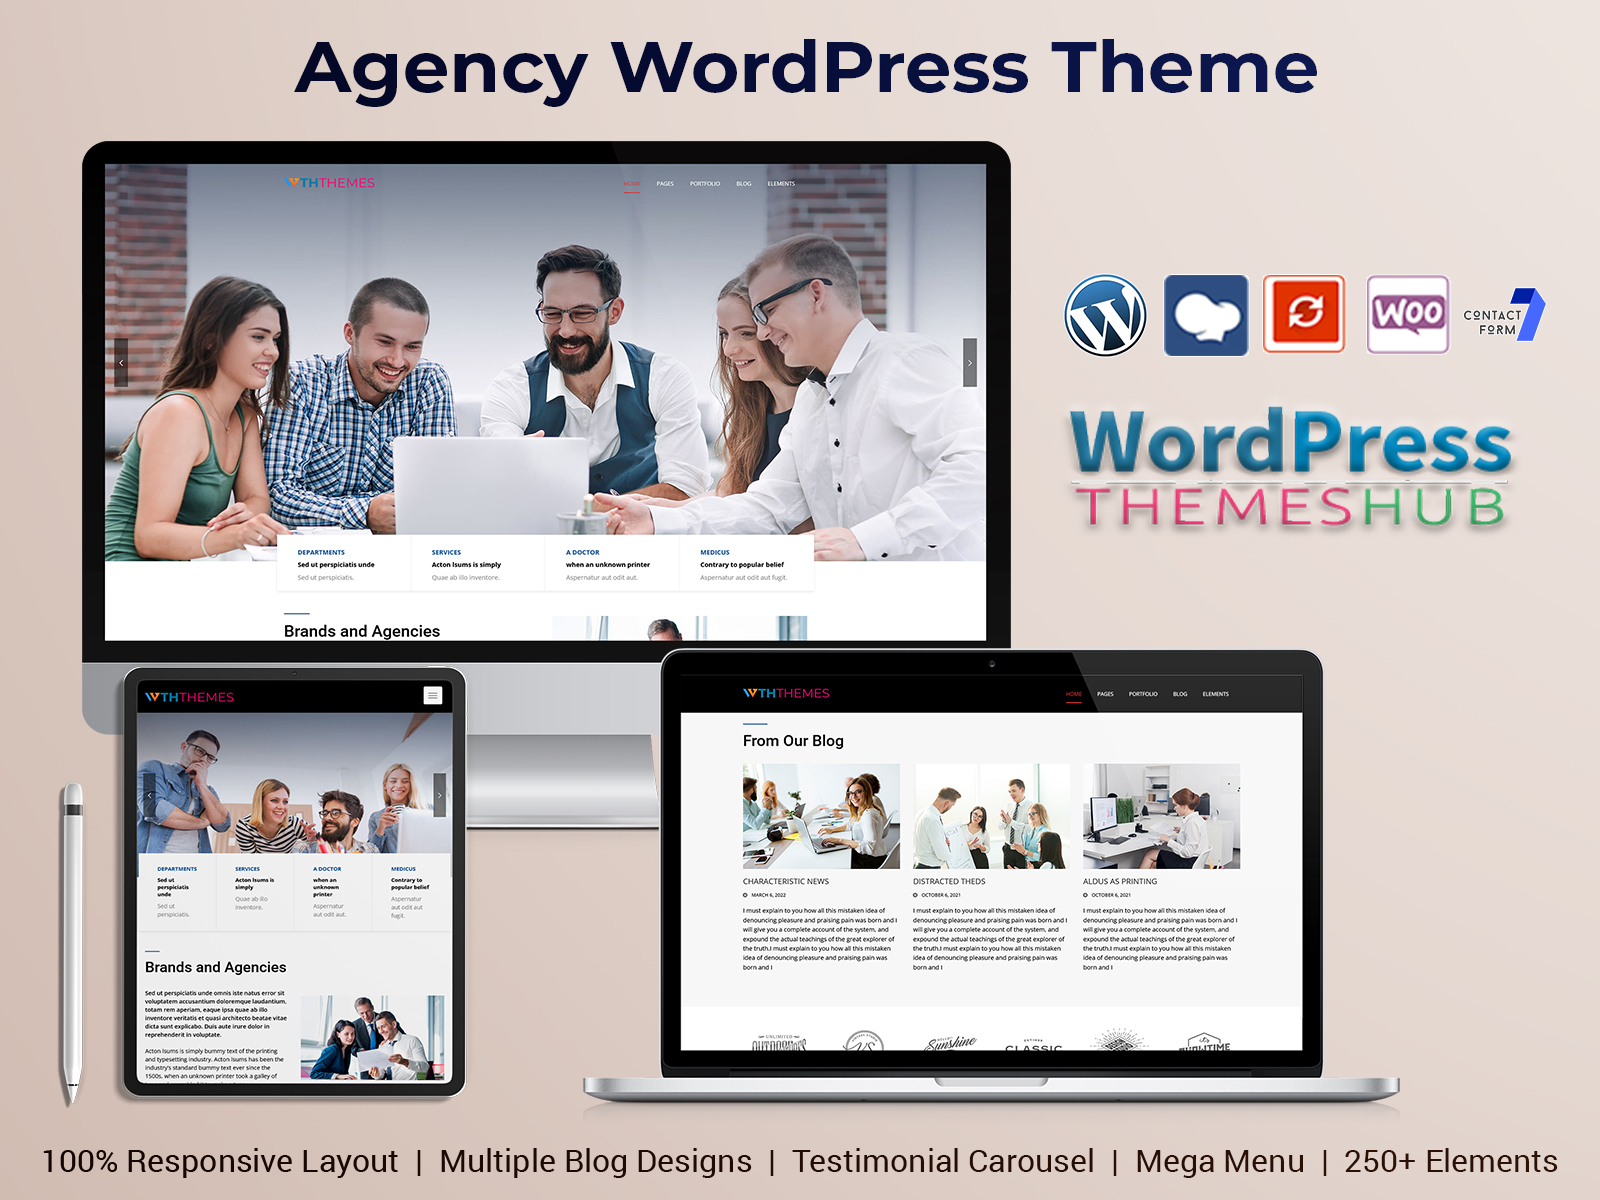 Agency WordPress Theme To Make Business Website